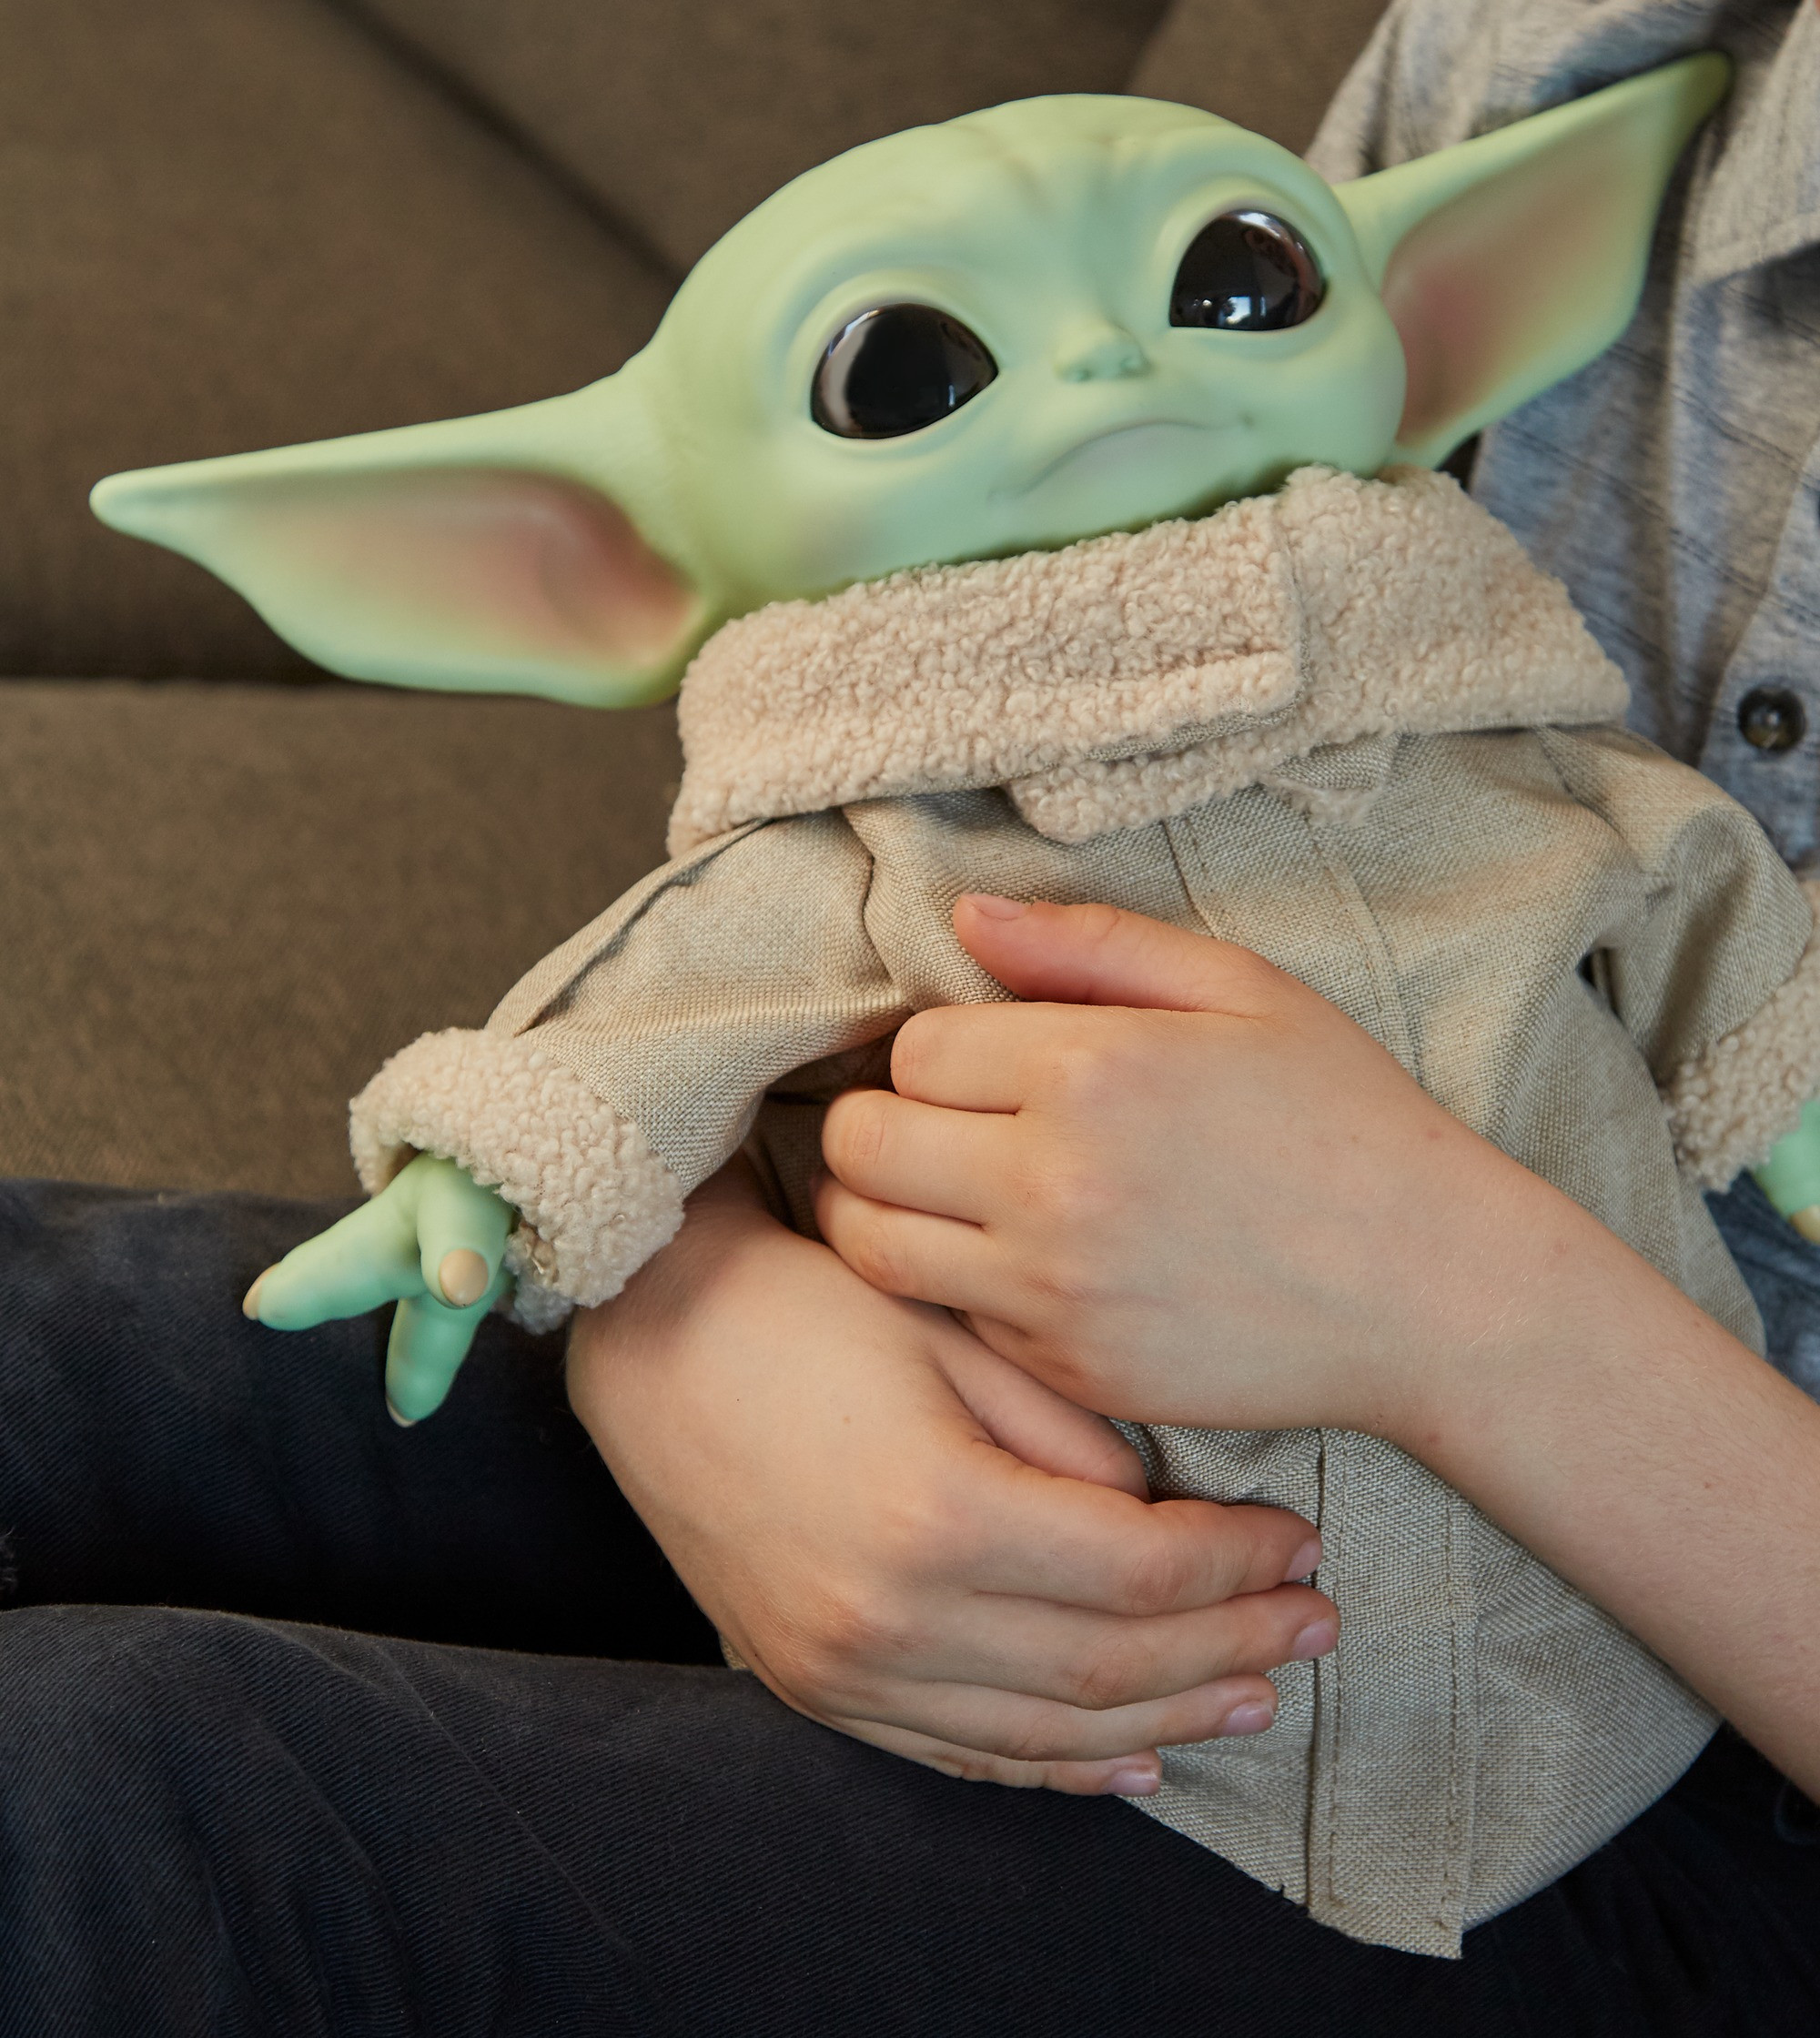 Star Wars Baby Yoda A criança da série The Mandalorian